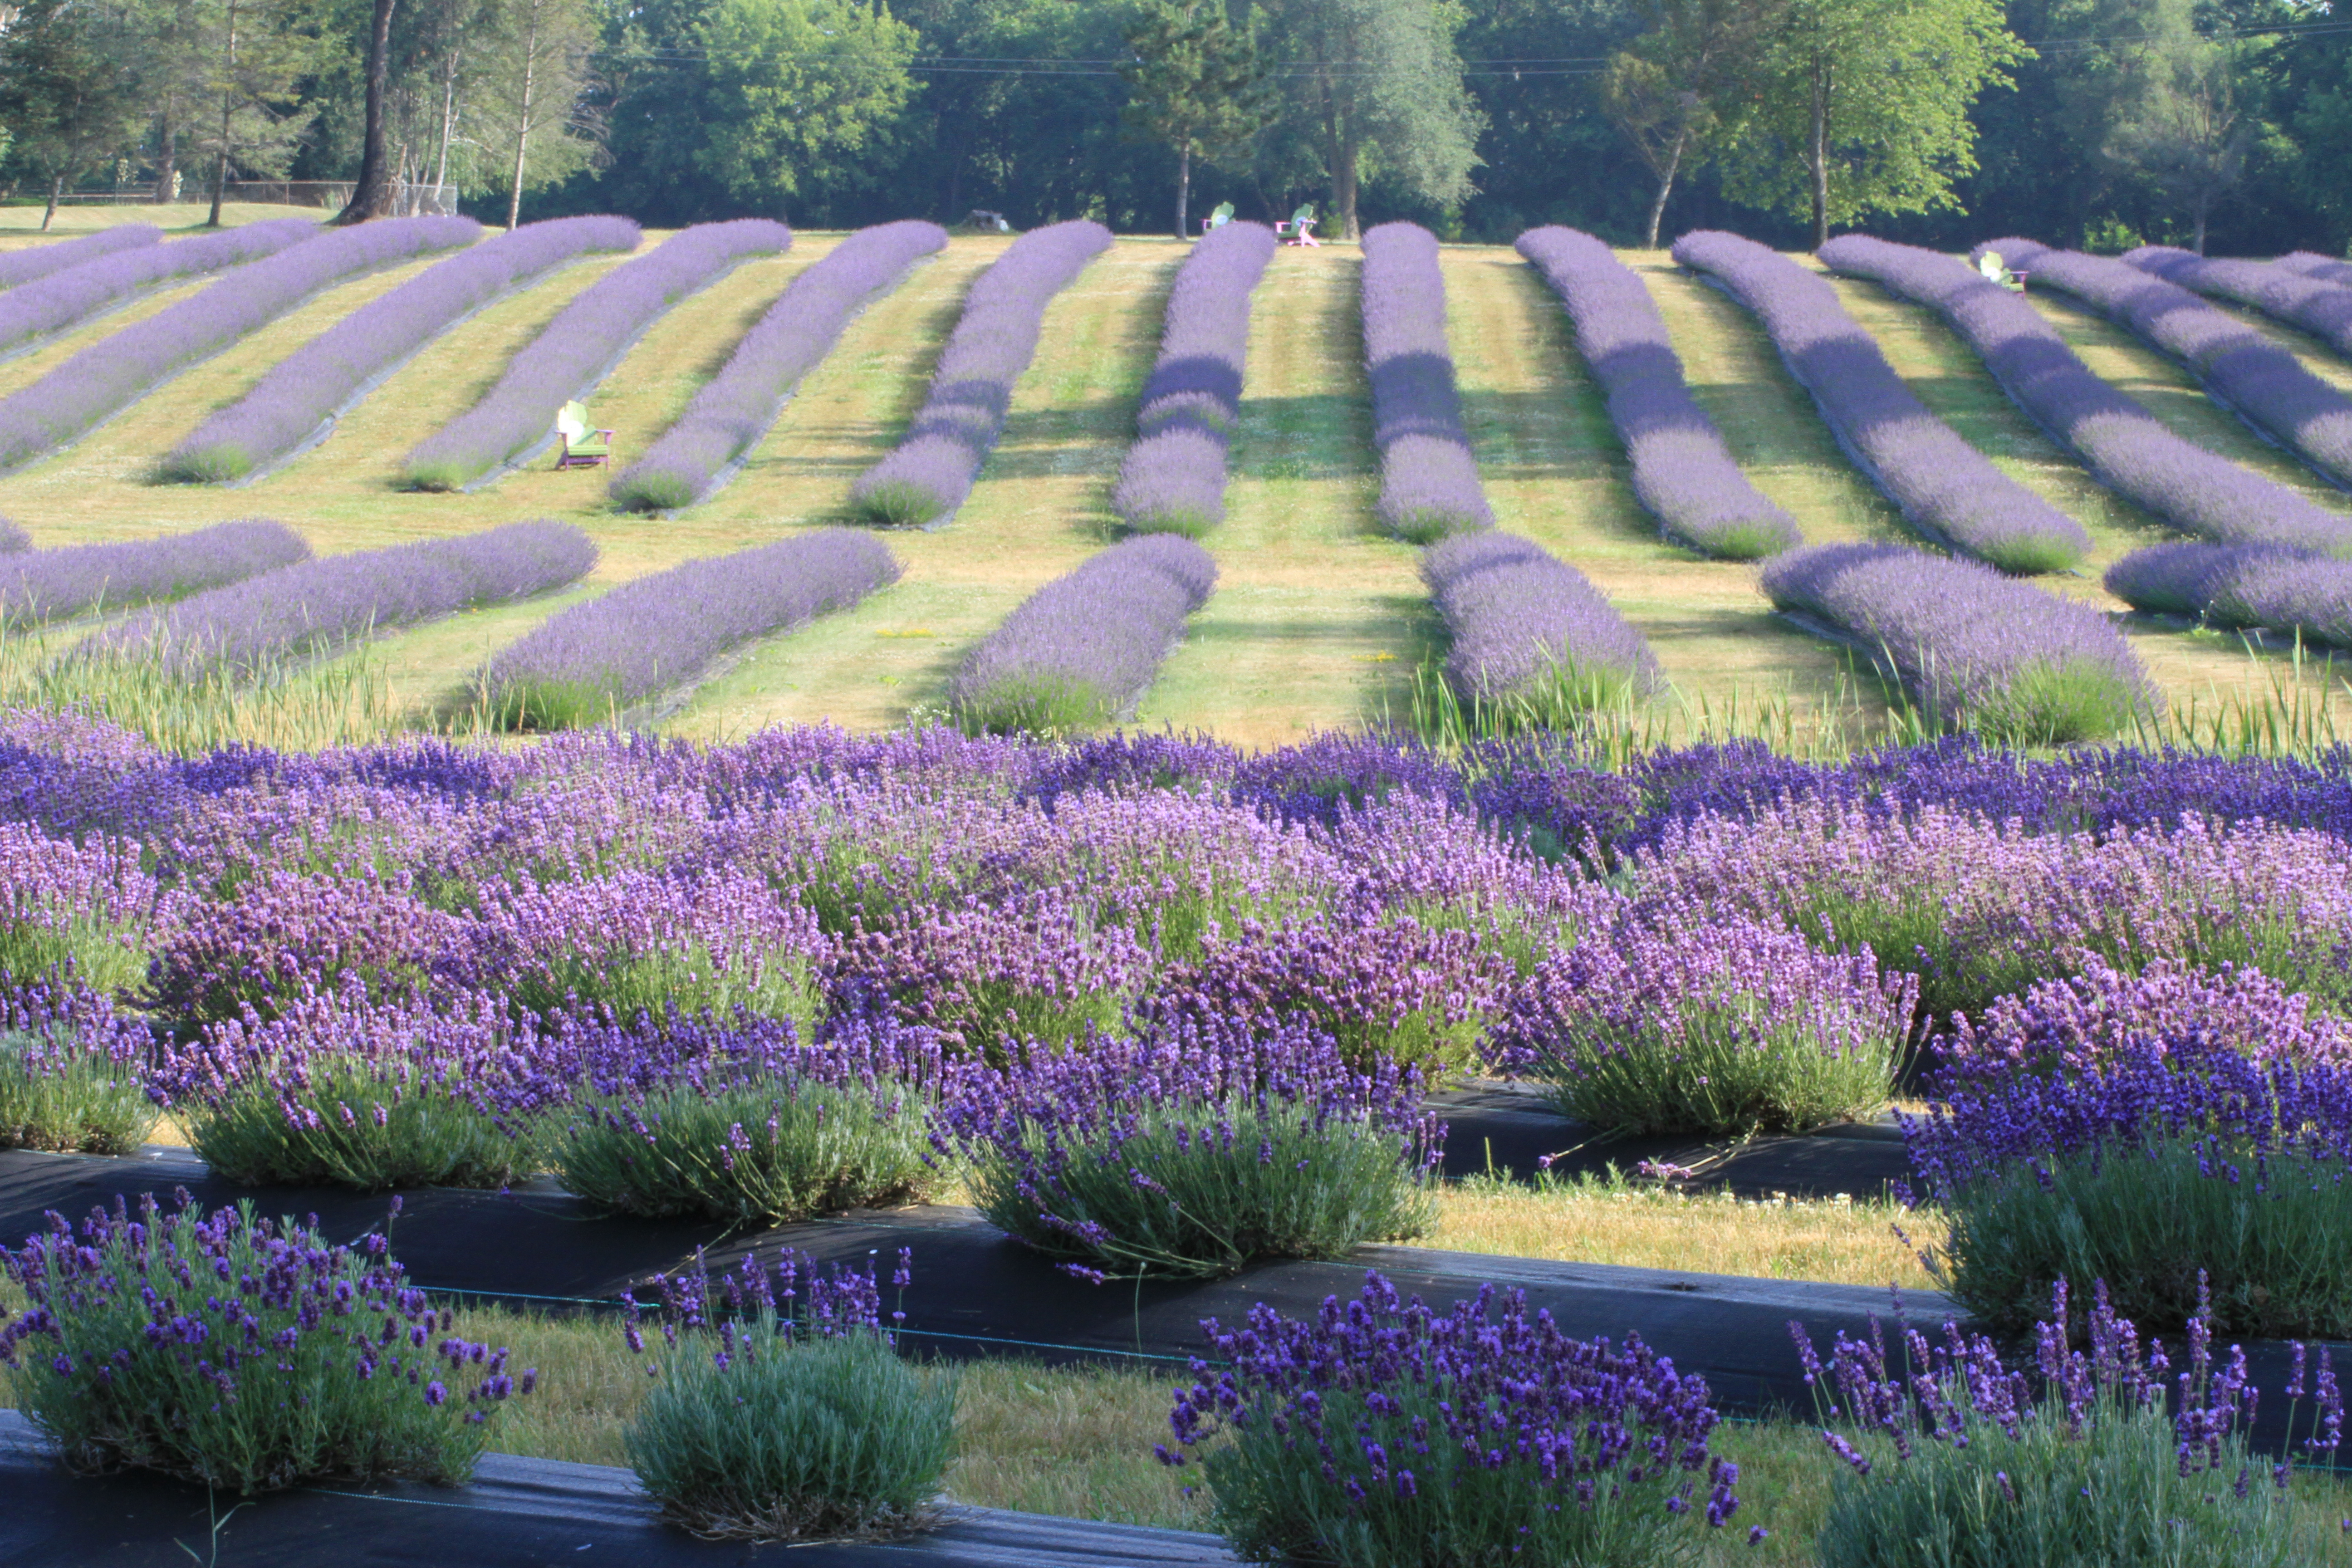 Fields of lavender at Indigo Lavender Farms, Imlay City, Michigan.